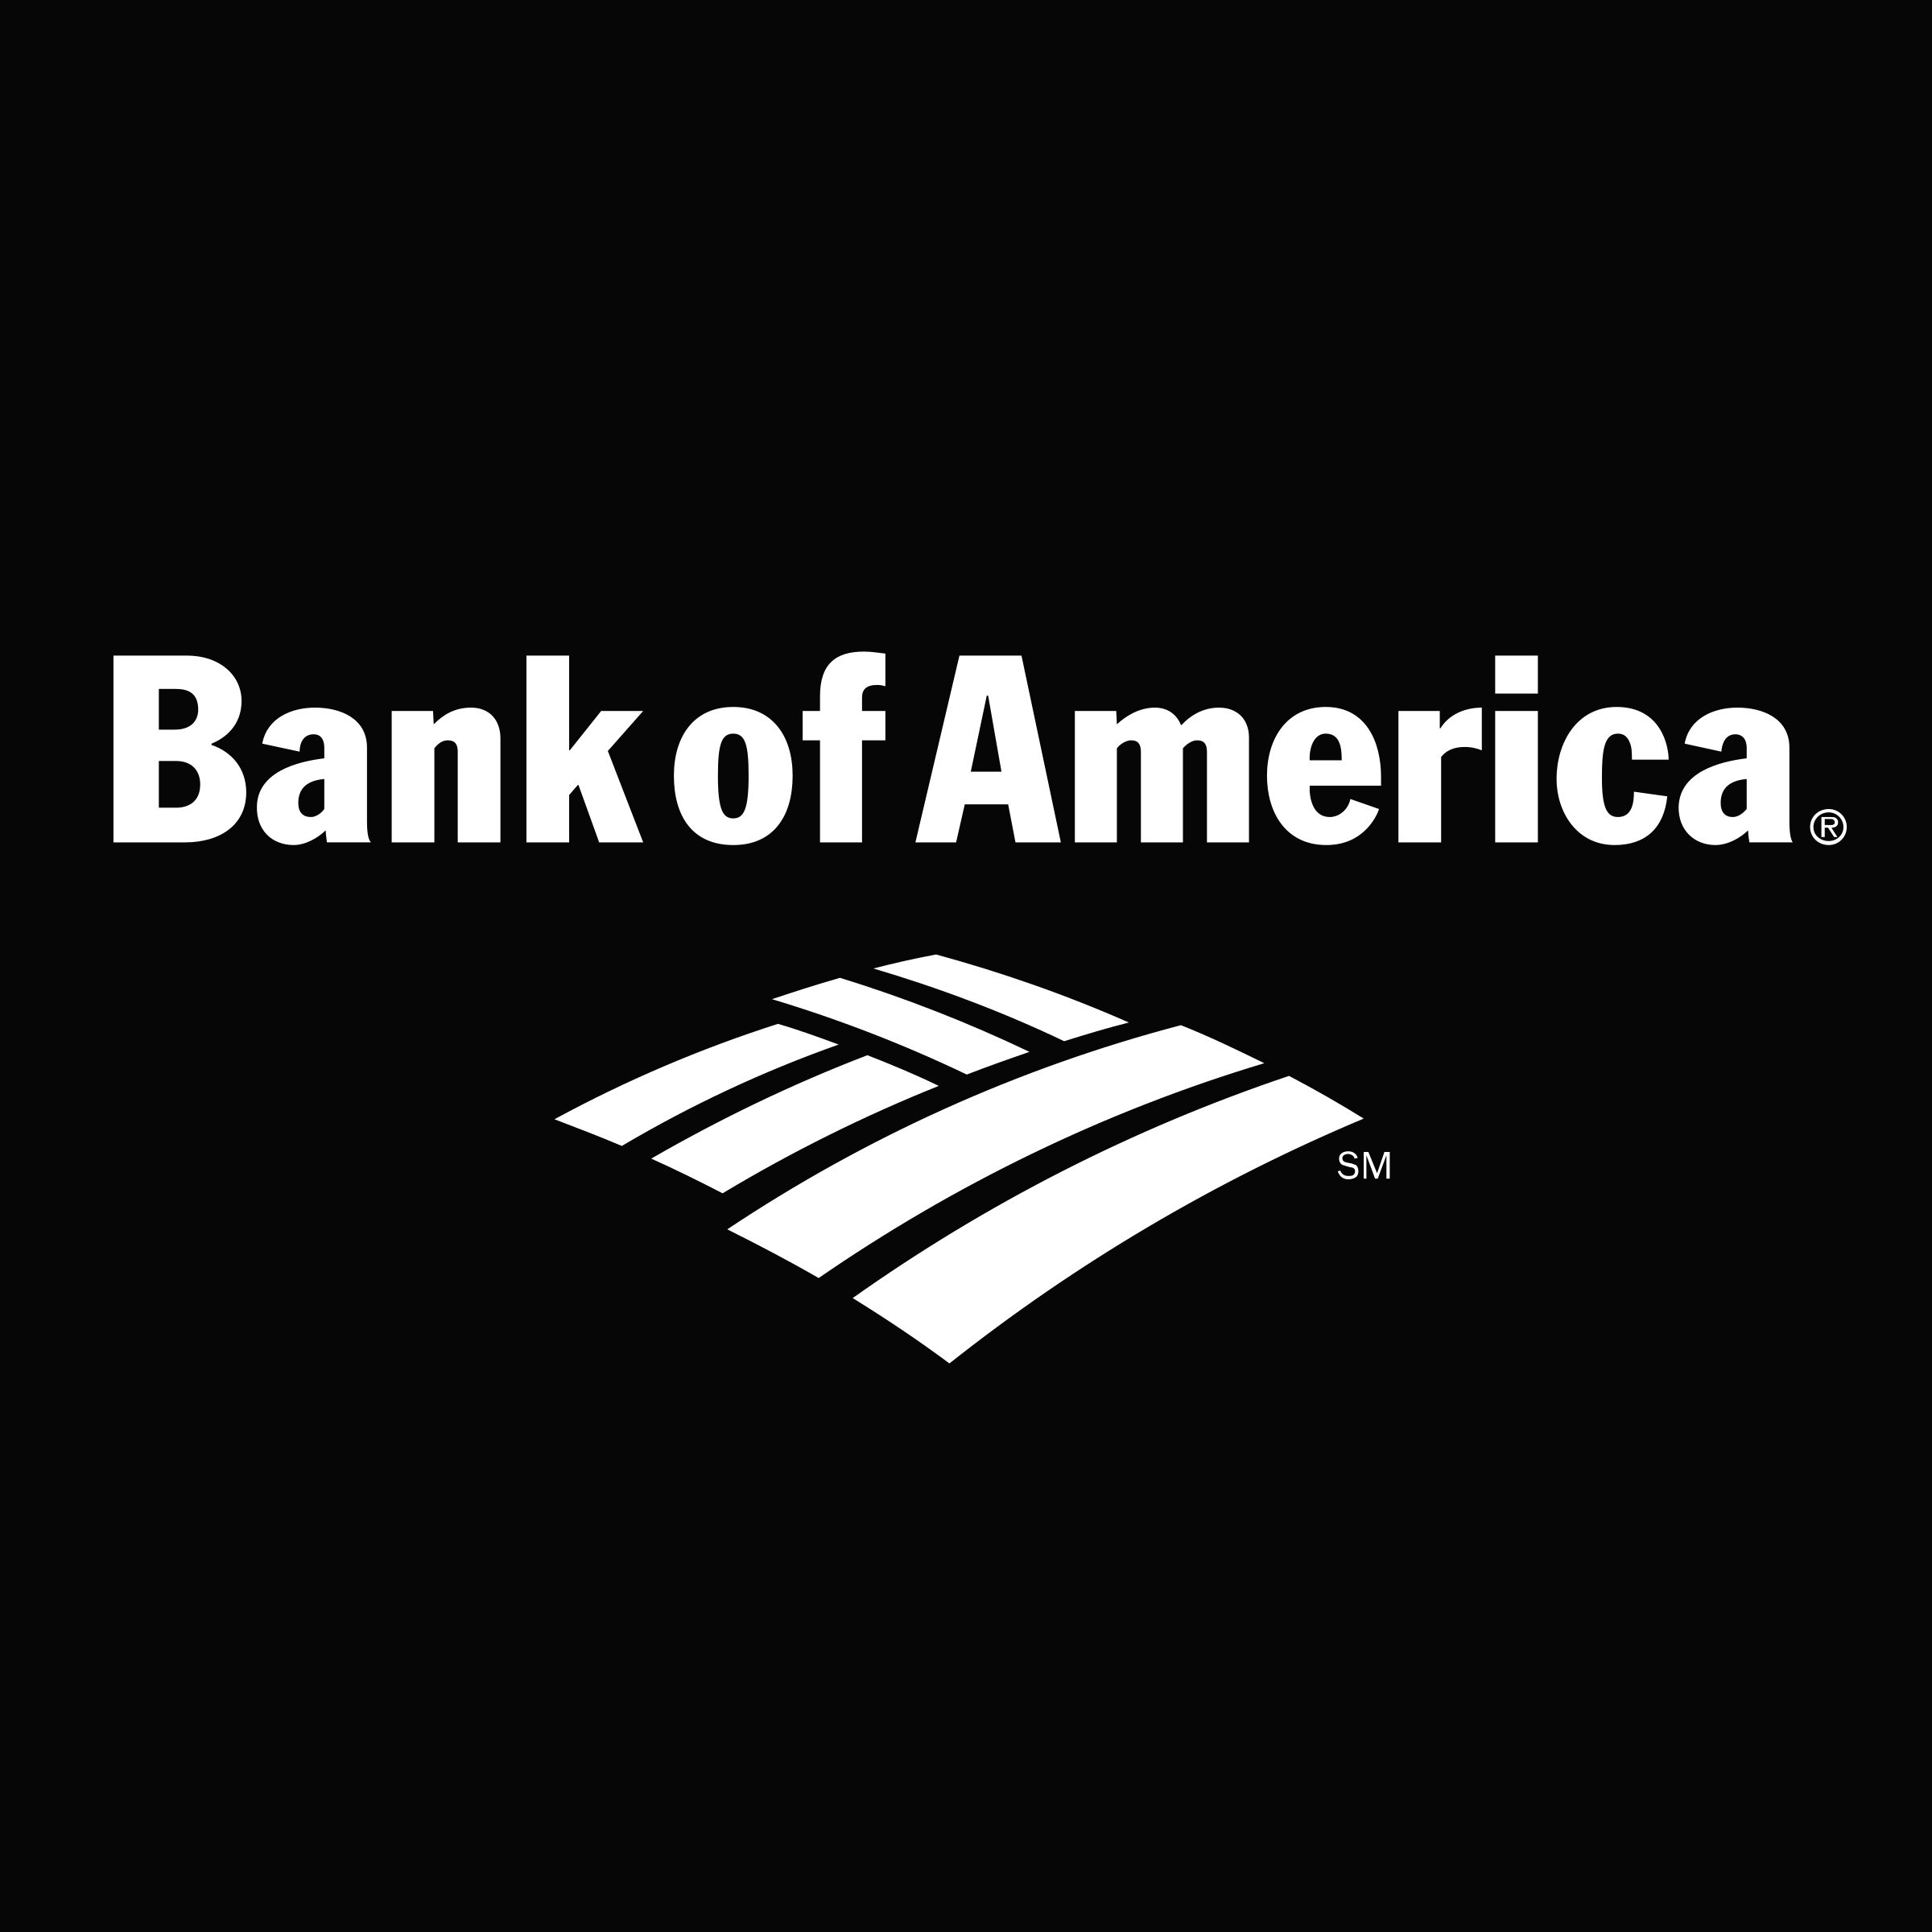 bank-of-america-2-logo-black-and-white.jpg